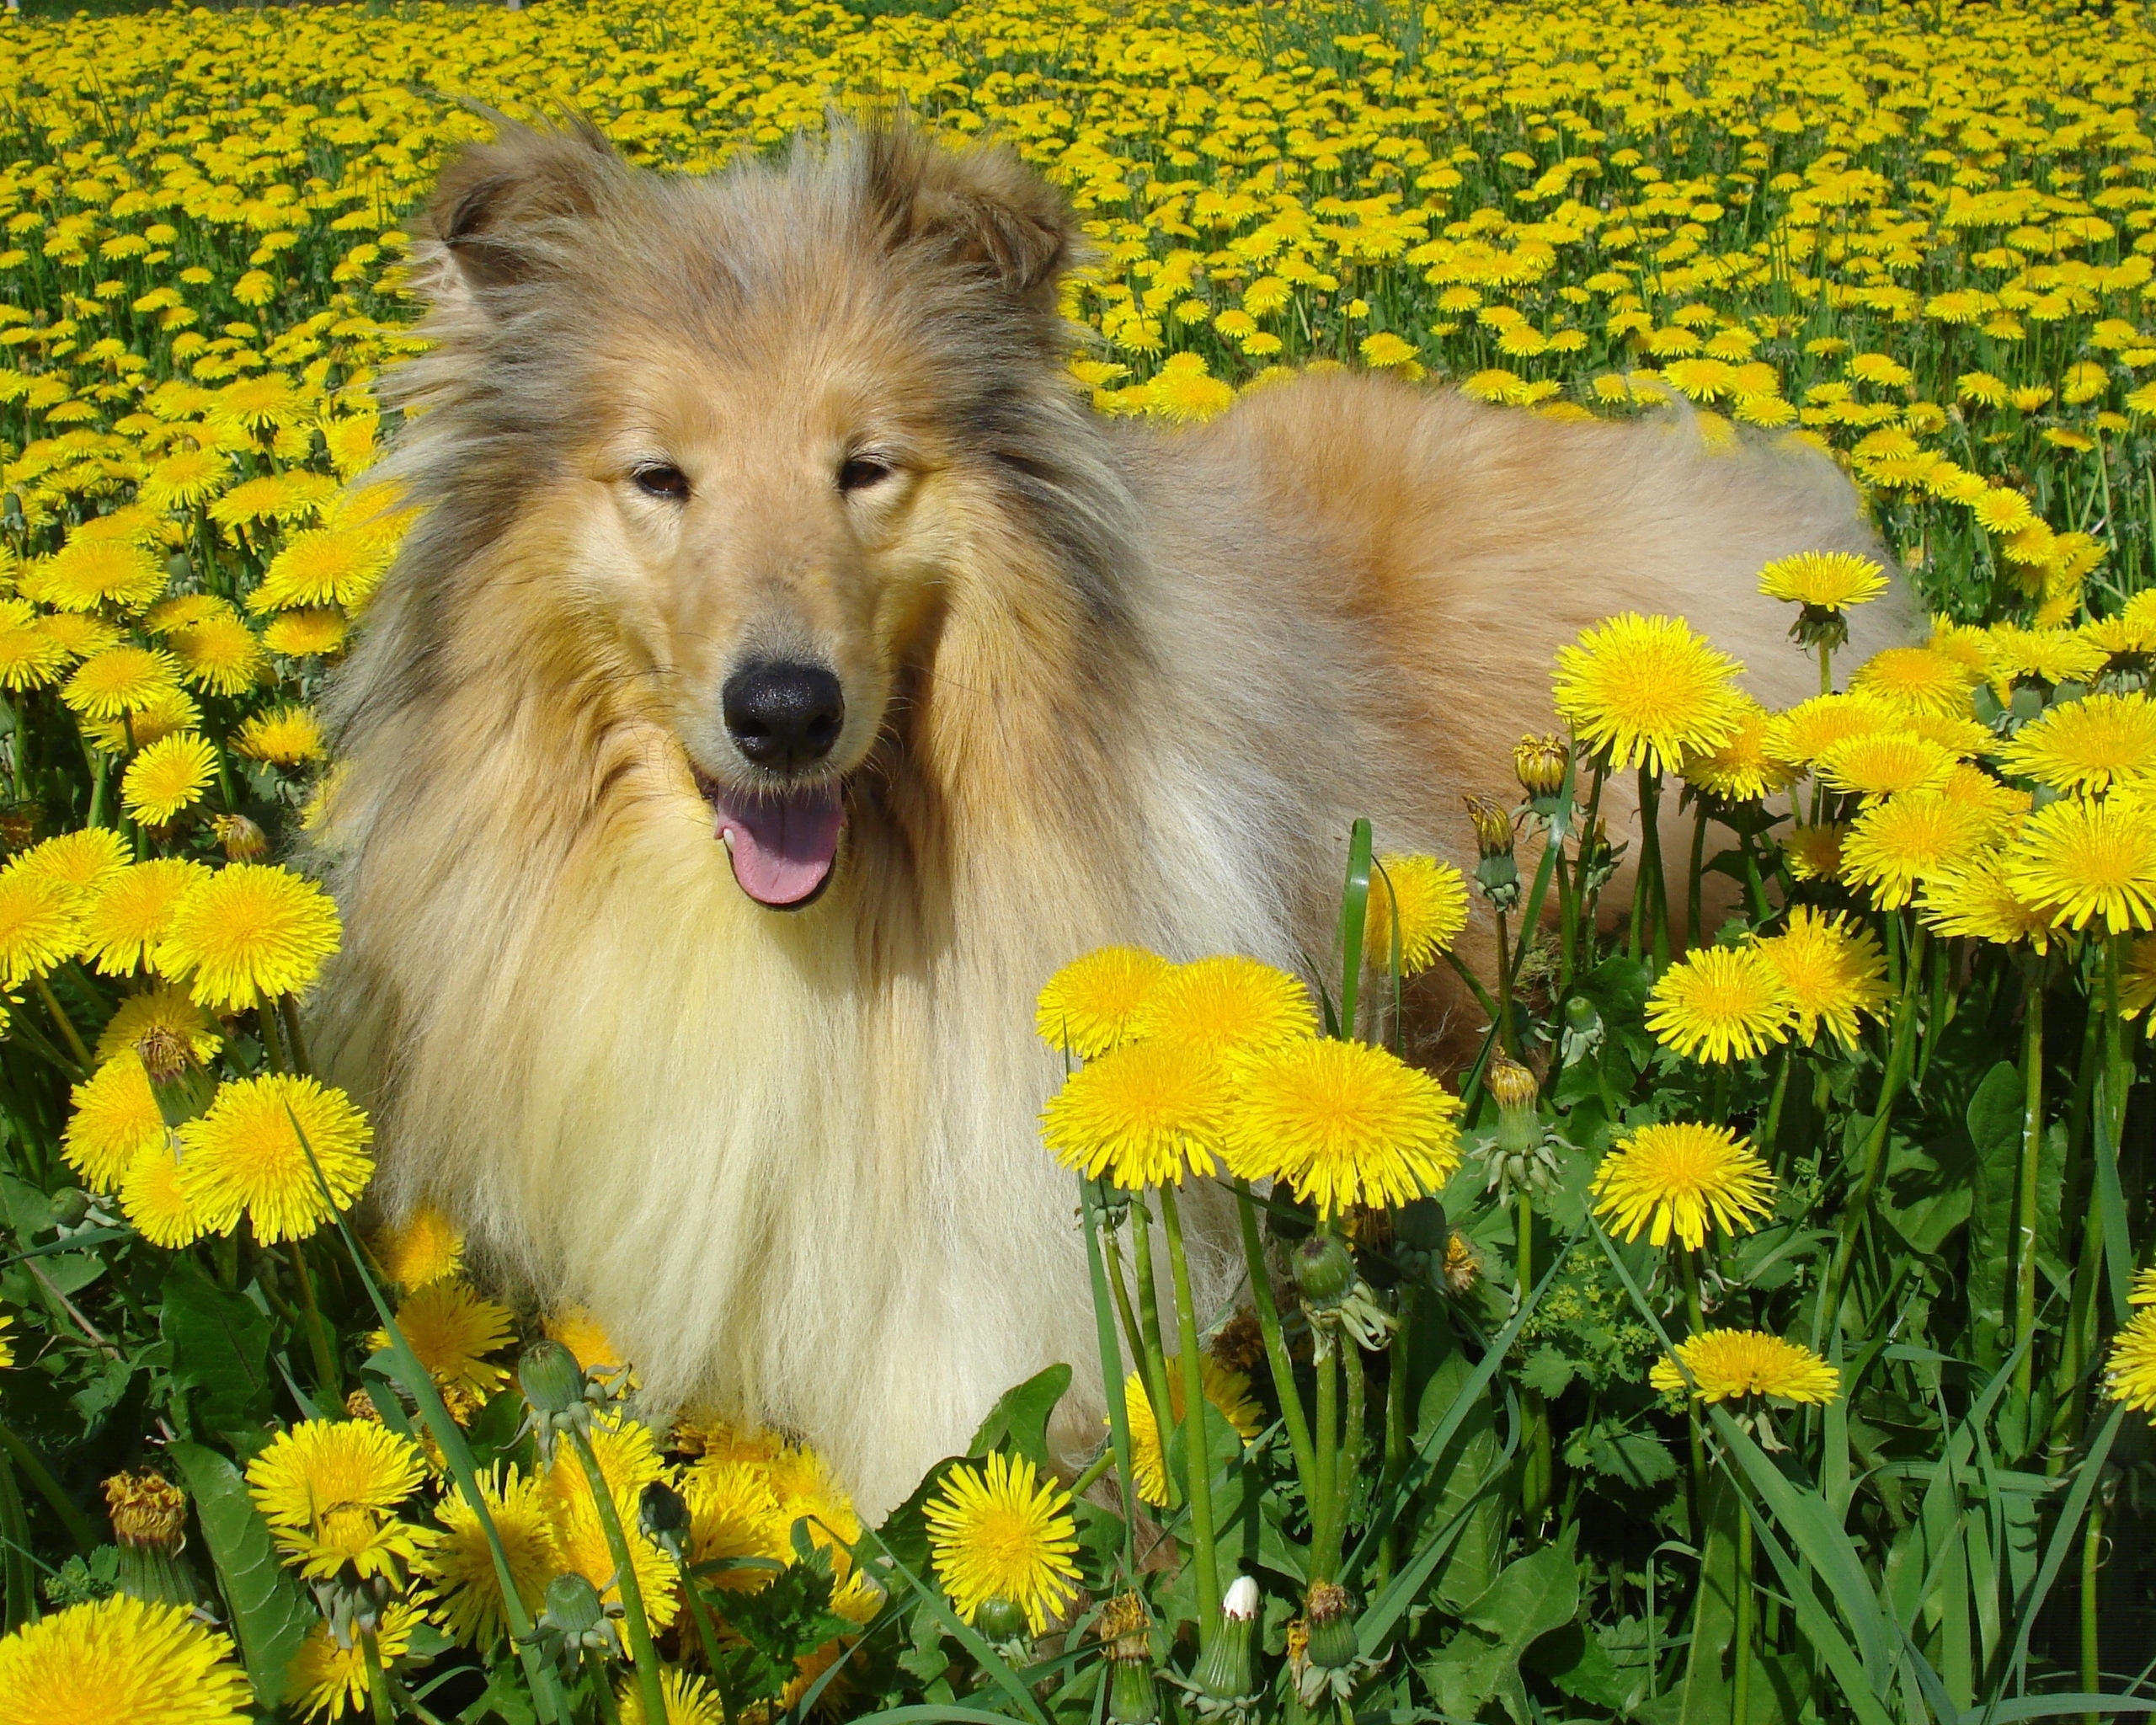 Image: Collie, dog, wool, dandelions, grass, summer